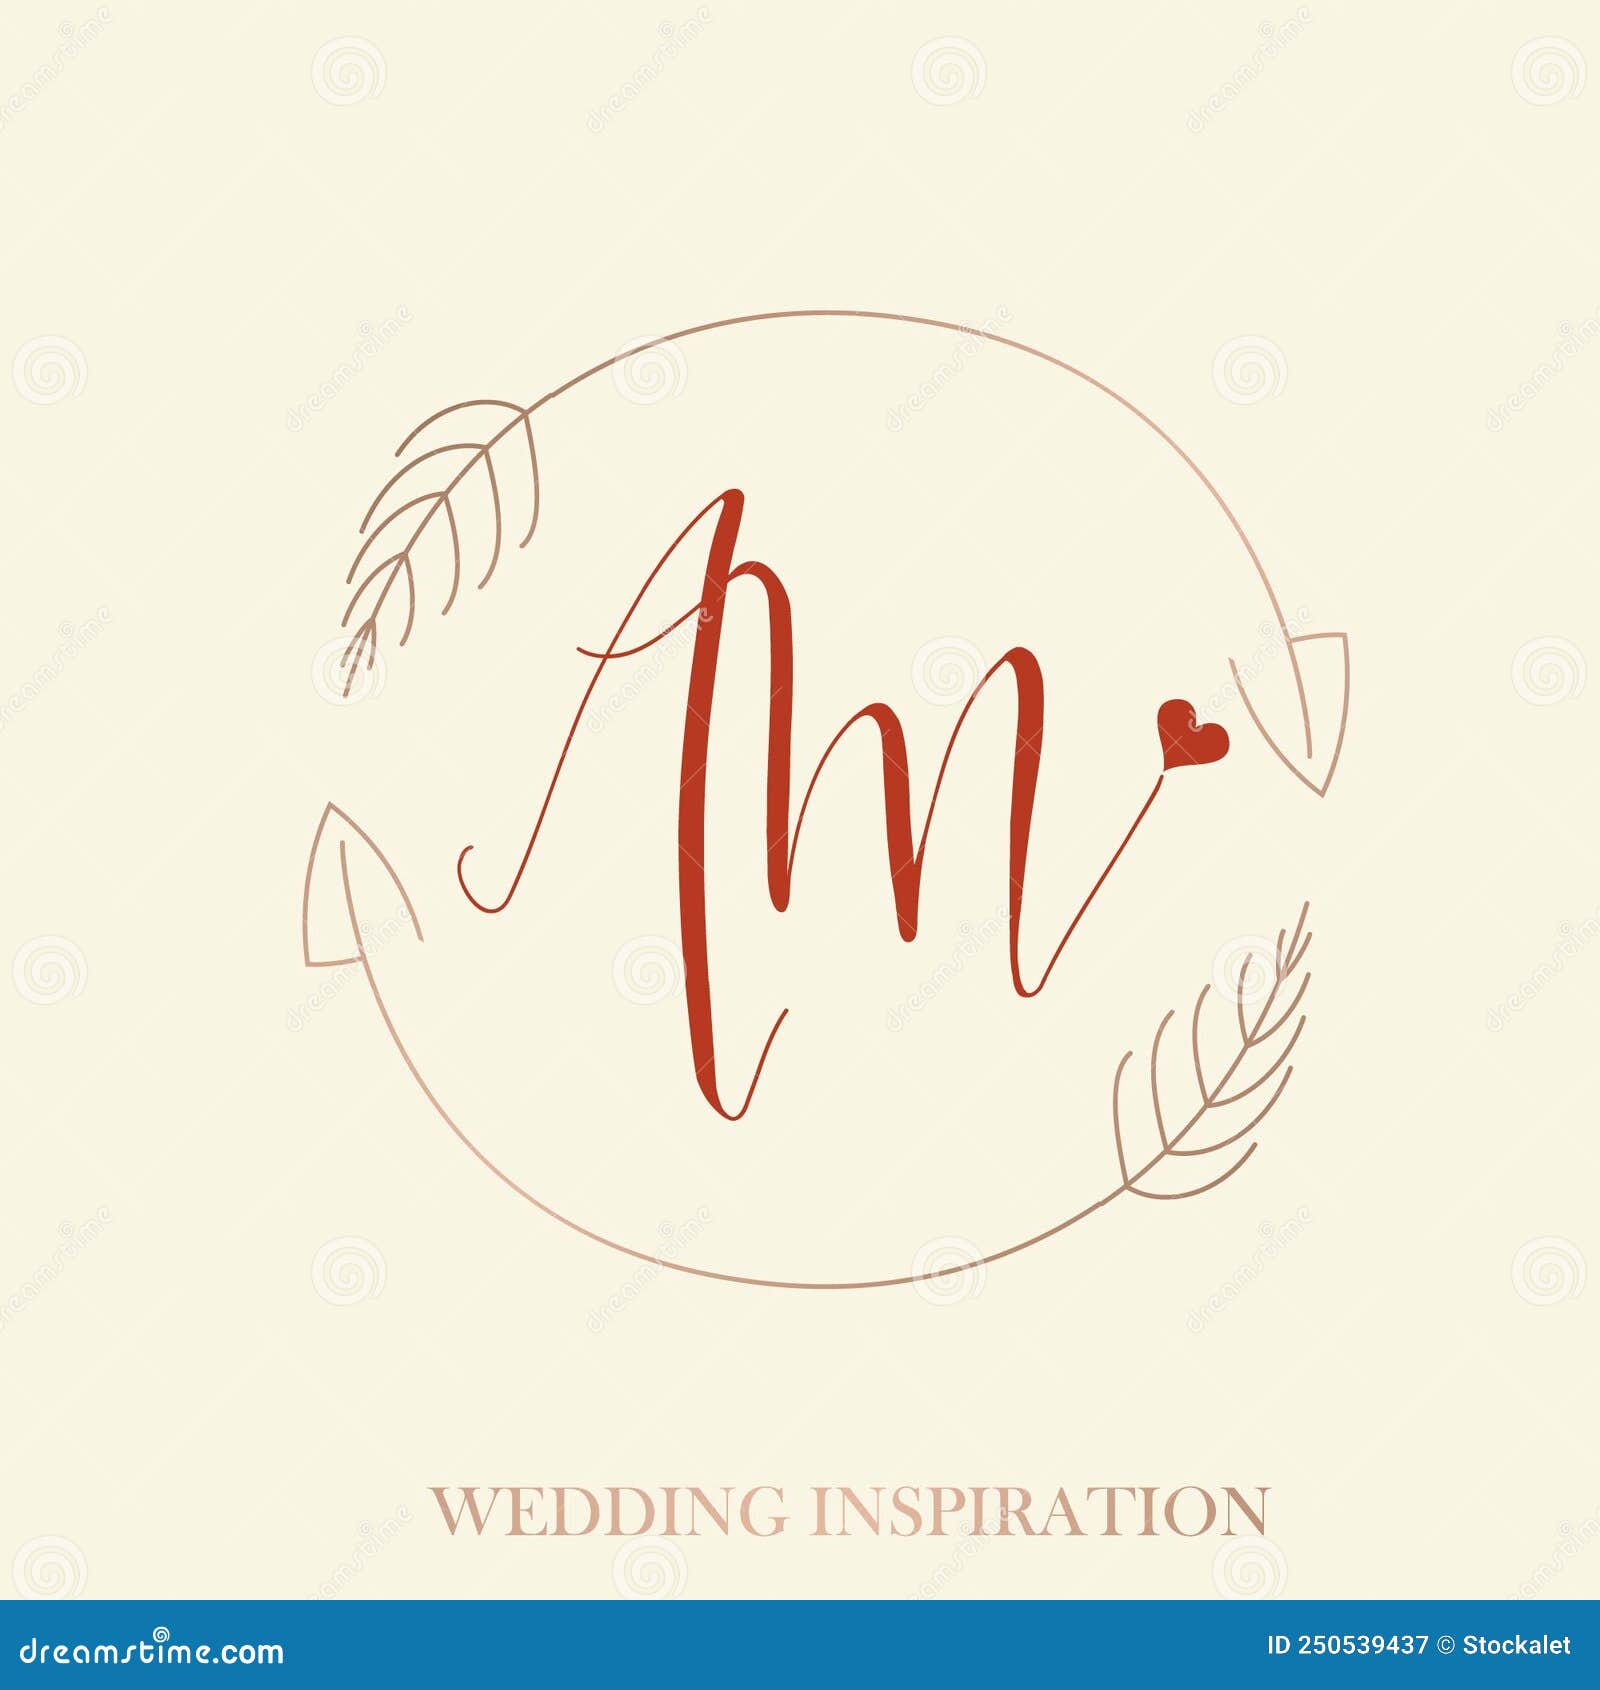 LV, VL, Wedding Monogram, Calligraphy Graphic by 99SiamVector